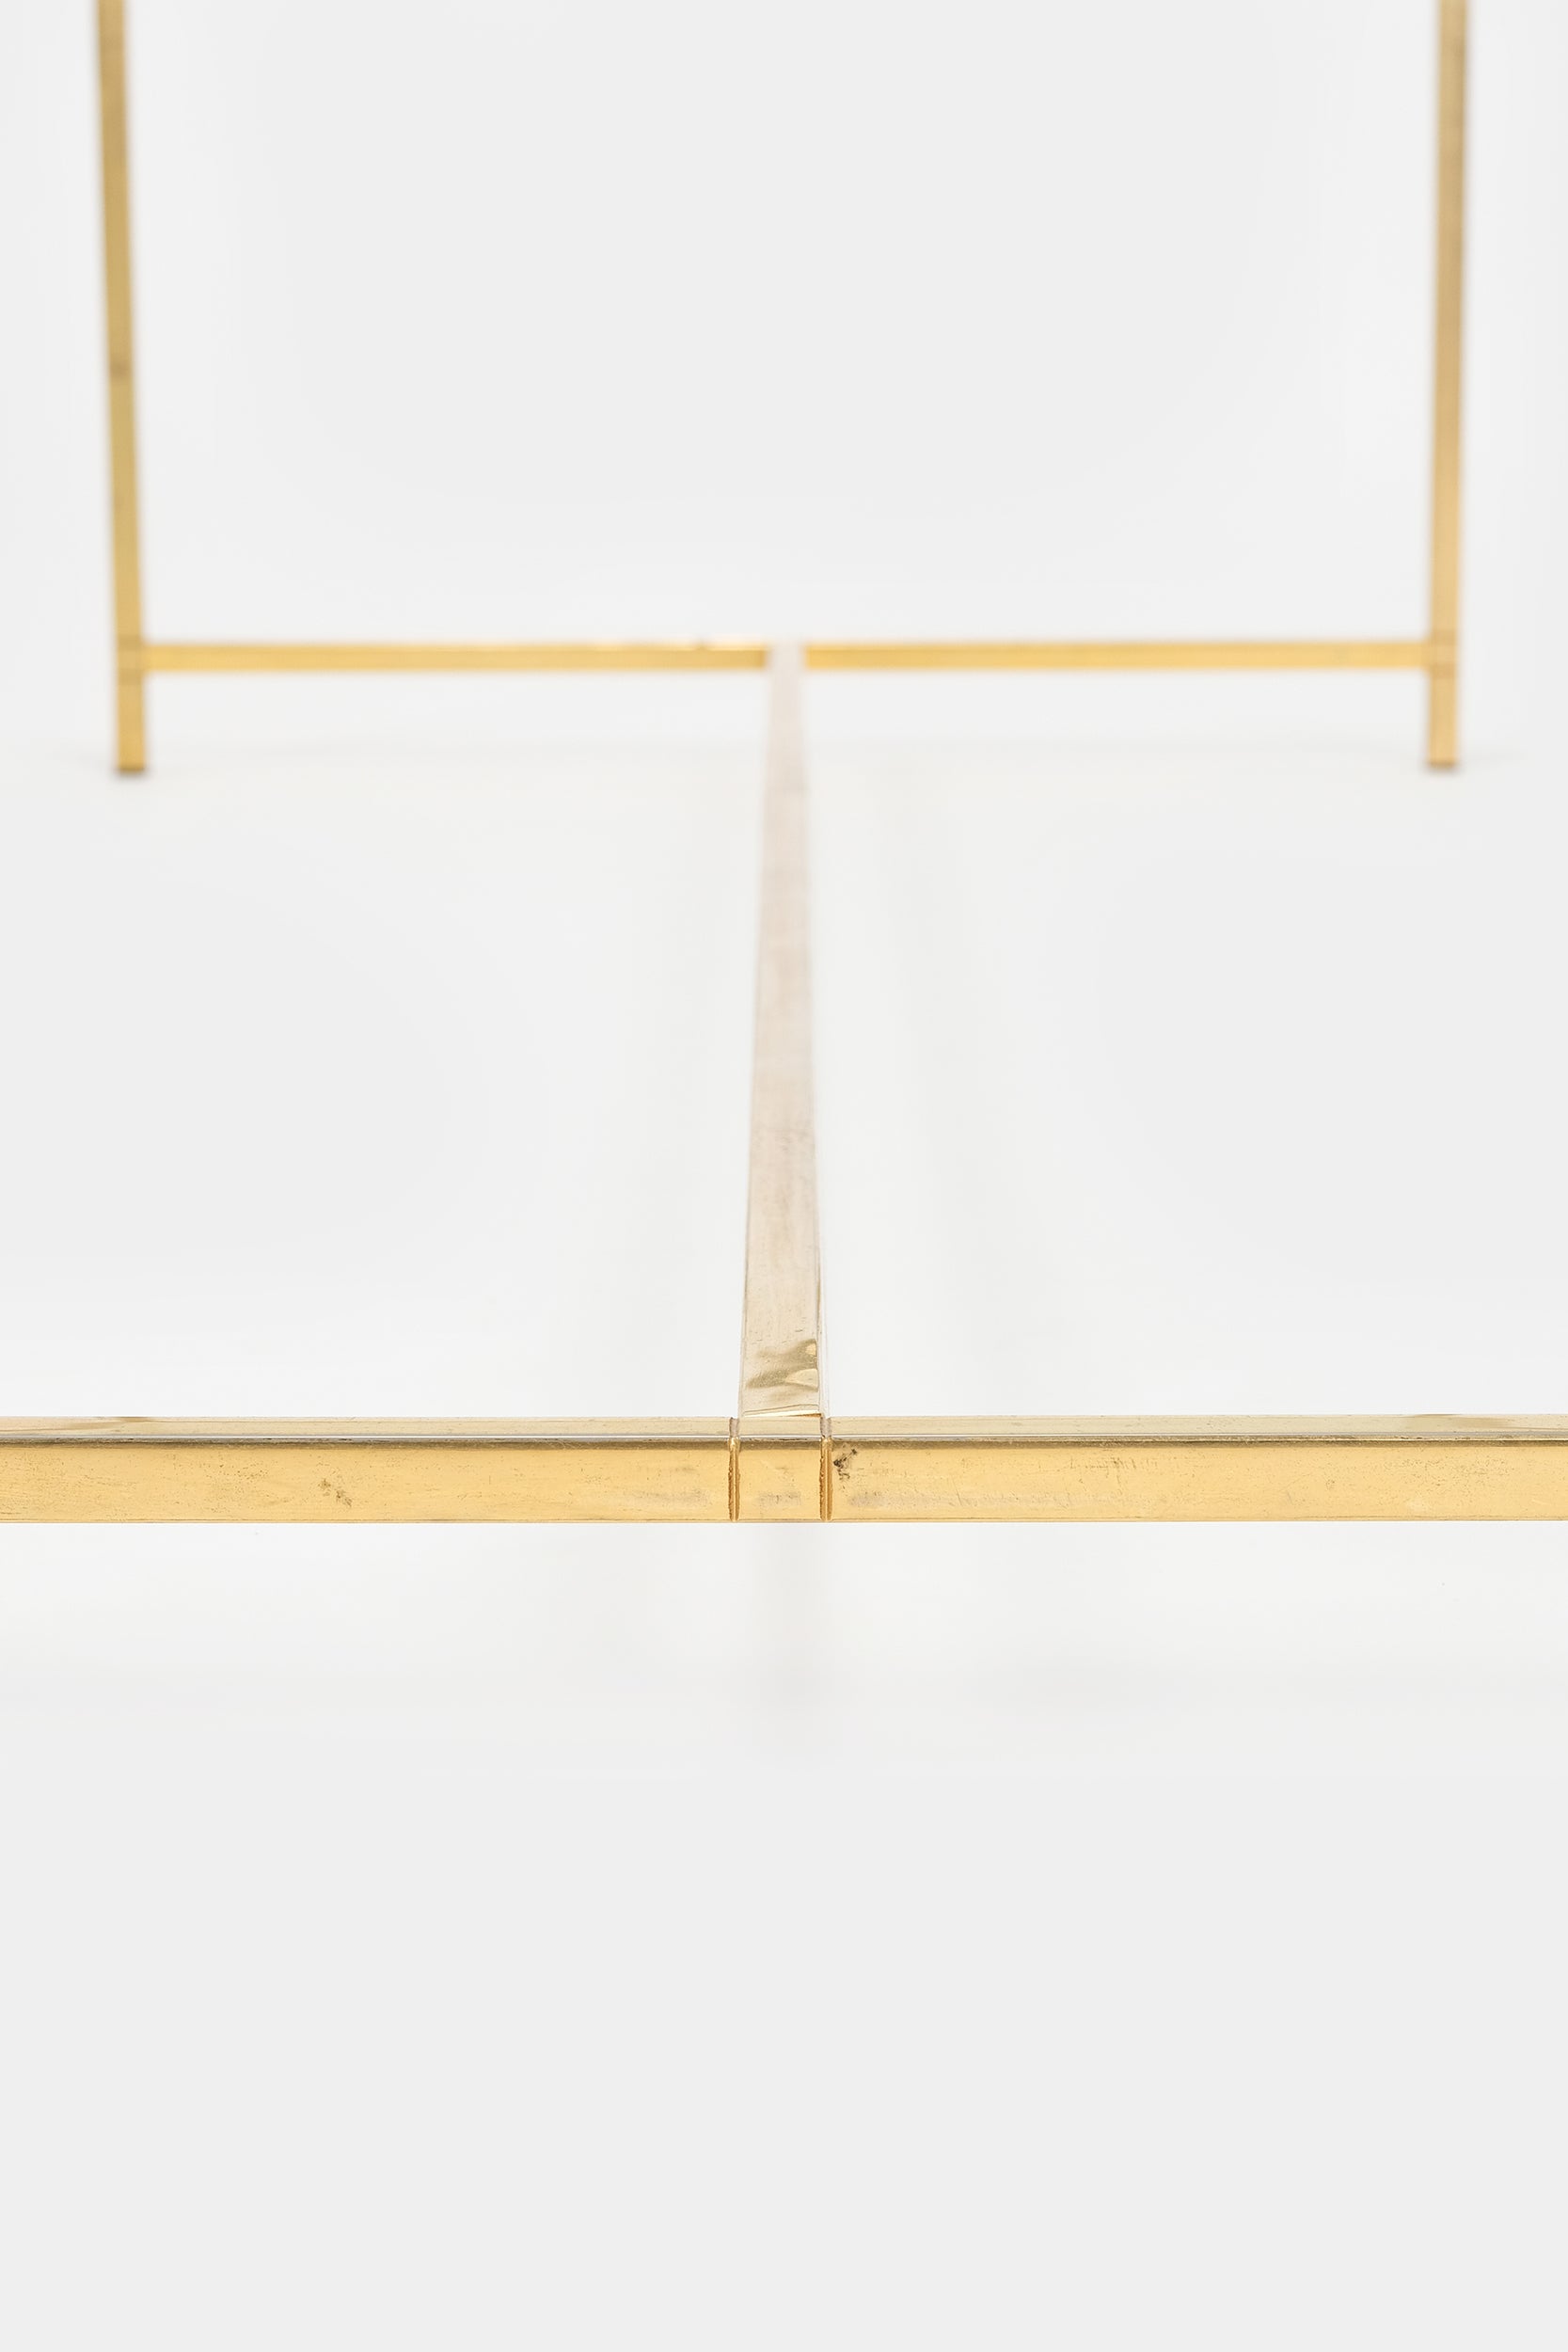 Side Table, Brass, Maison Jansen, 60s